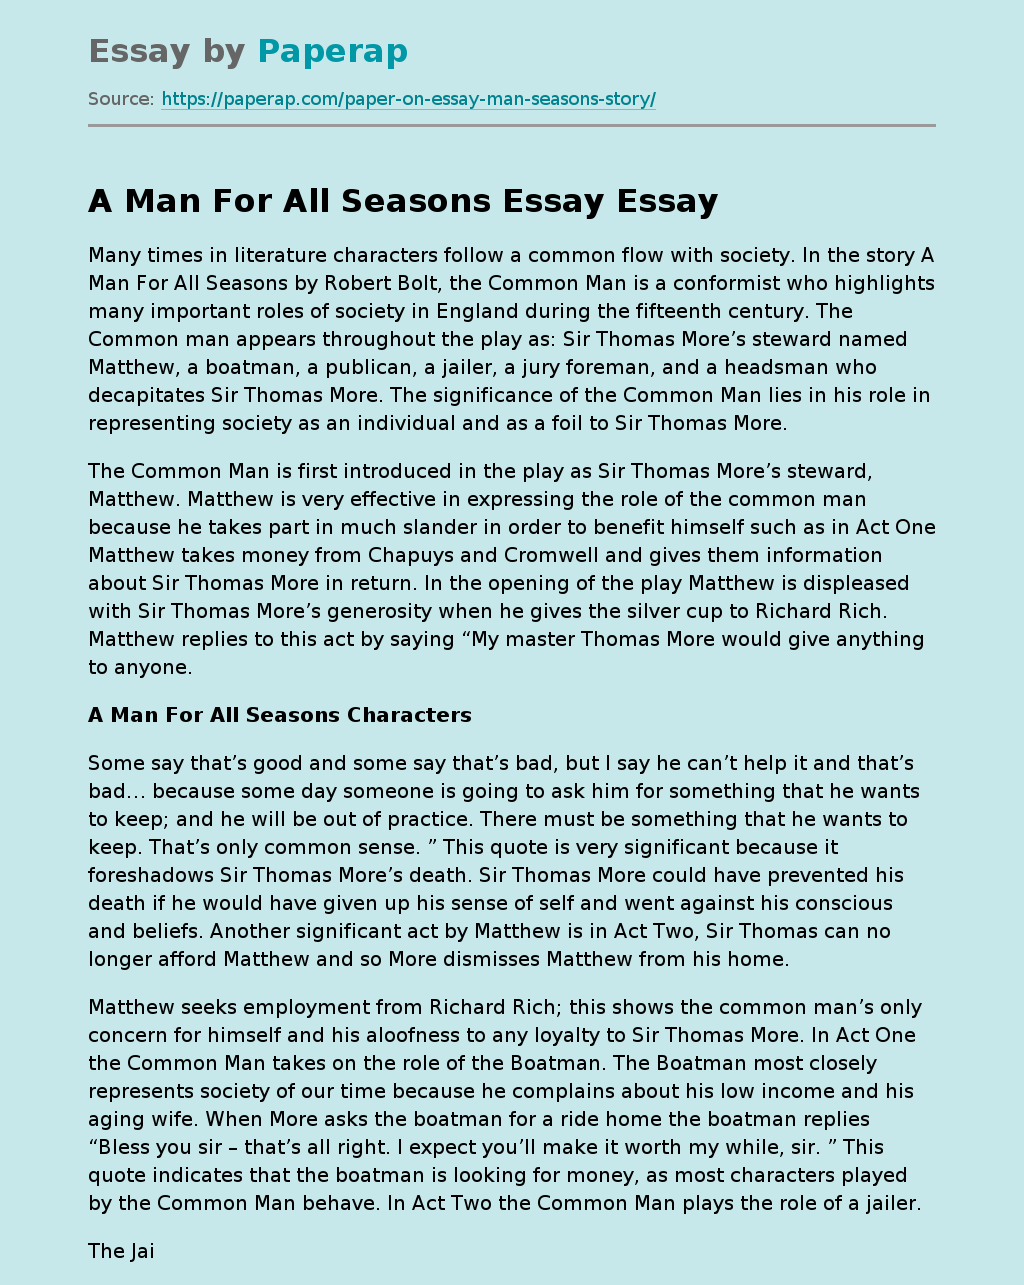 A Man For All Seasons Essay